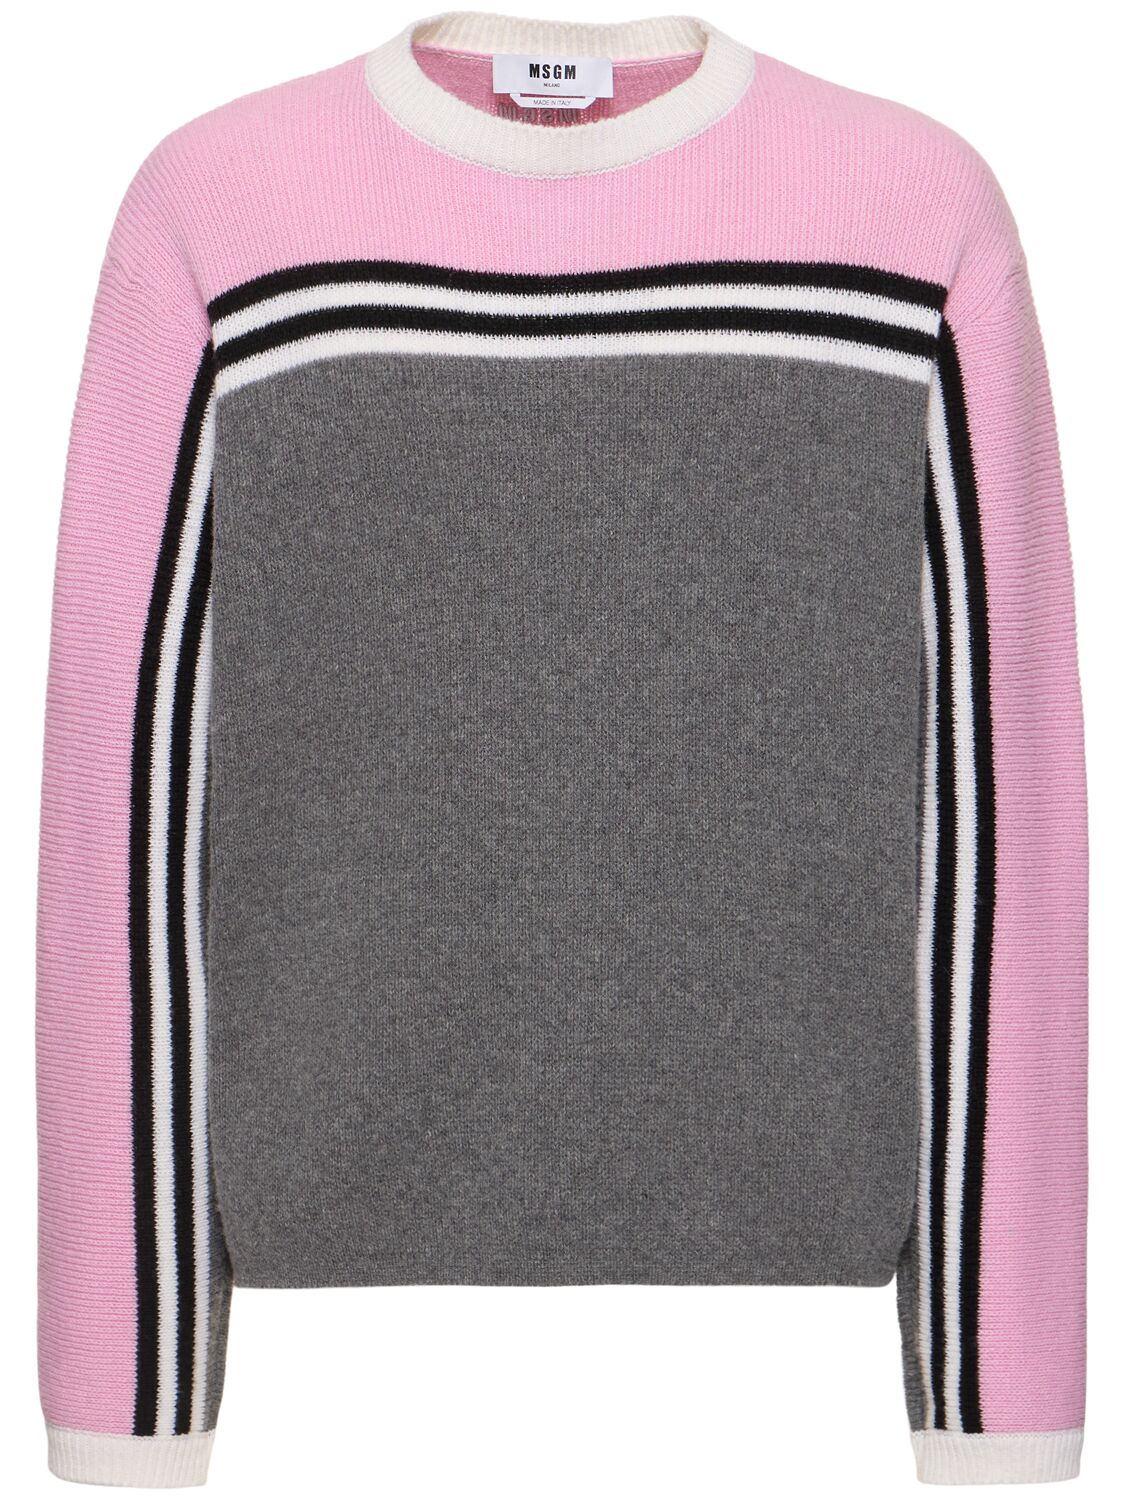 Msgm Striped Intarsia Knit Sweater In Pink